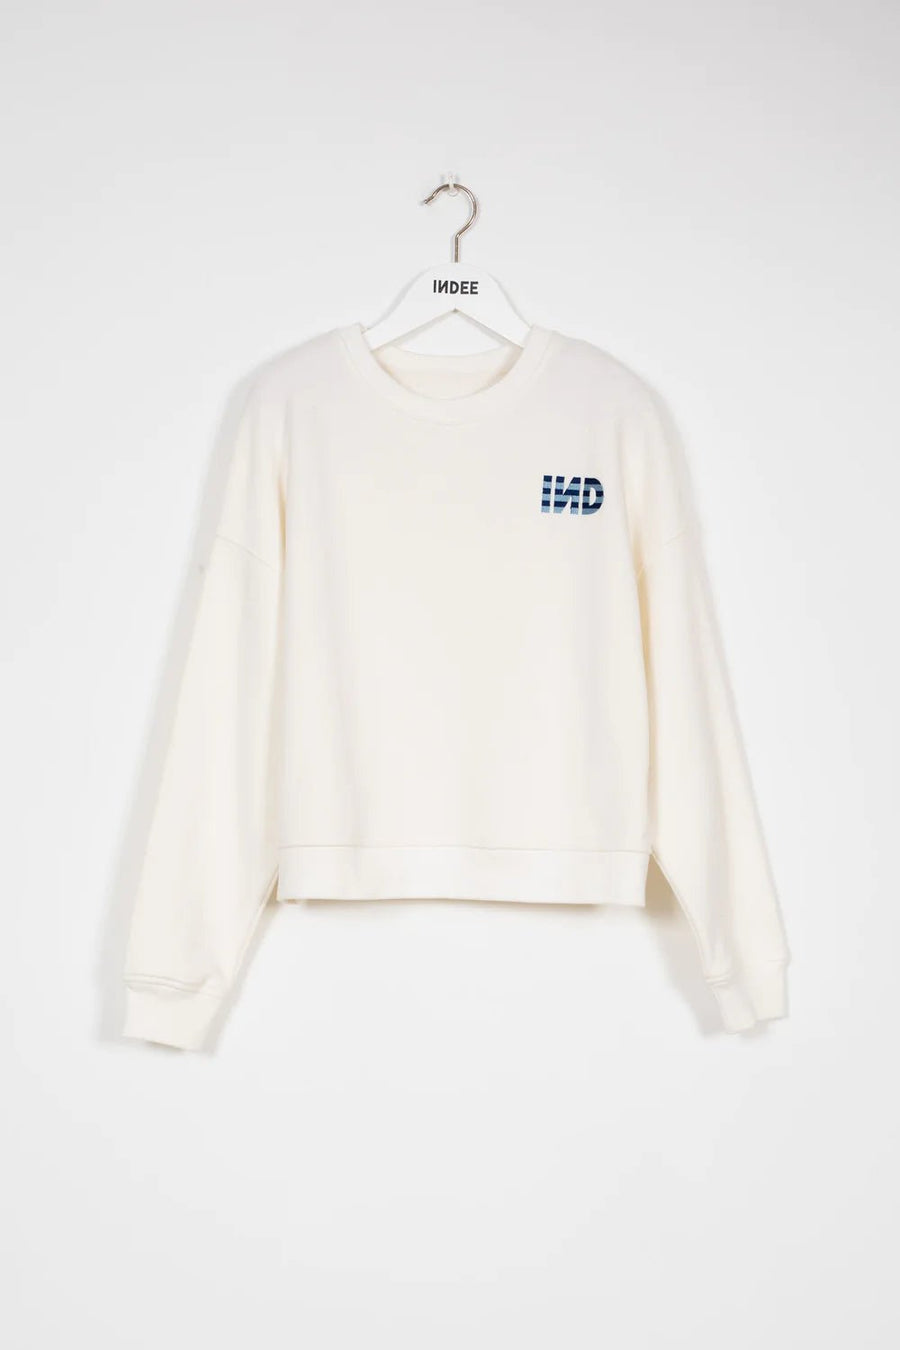 Ind Sweater - Off White - Posh New York